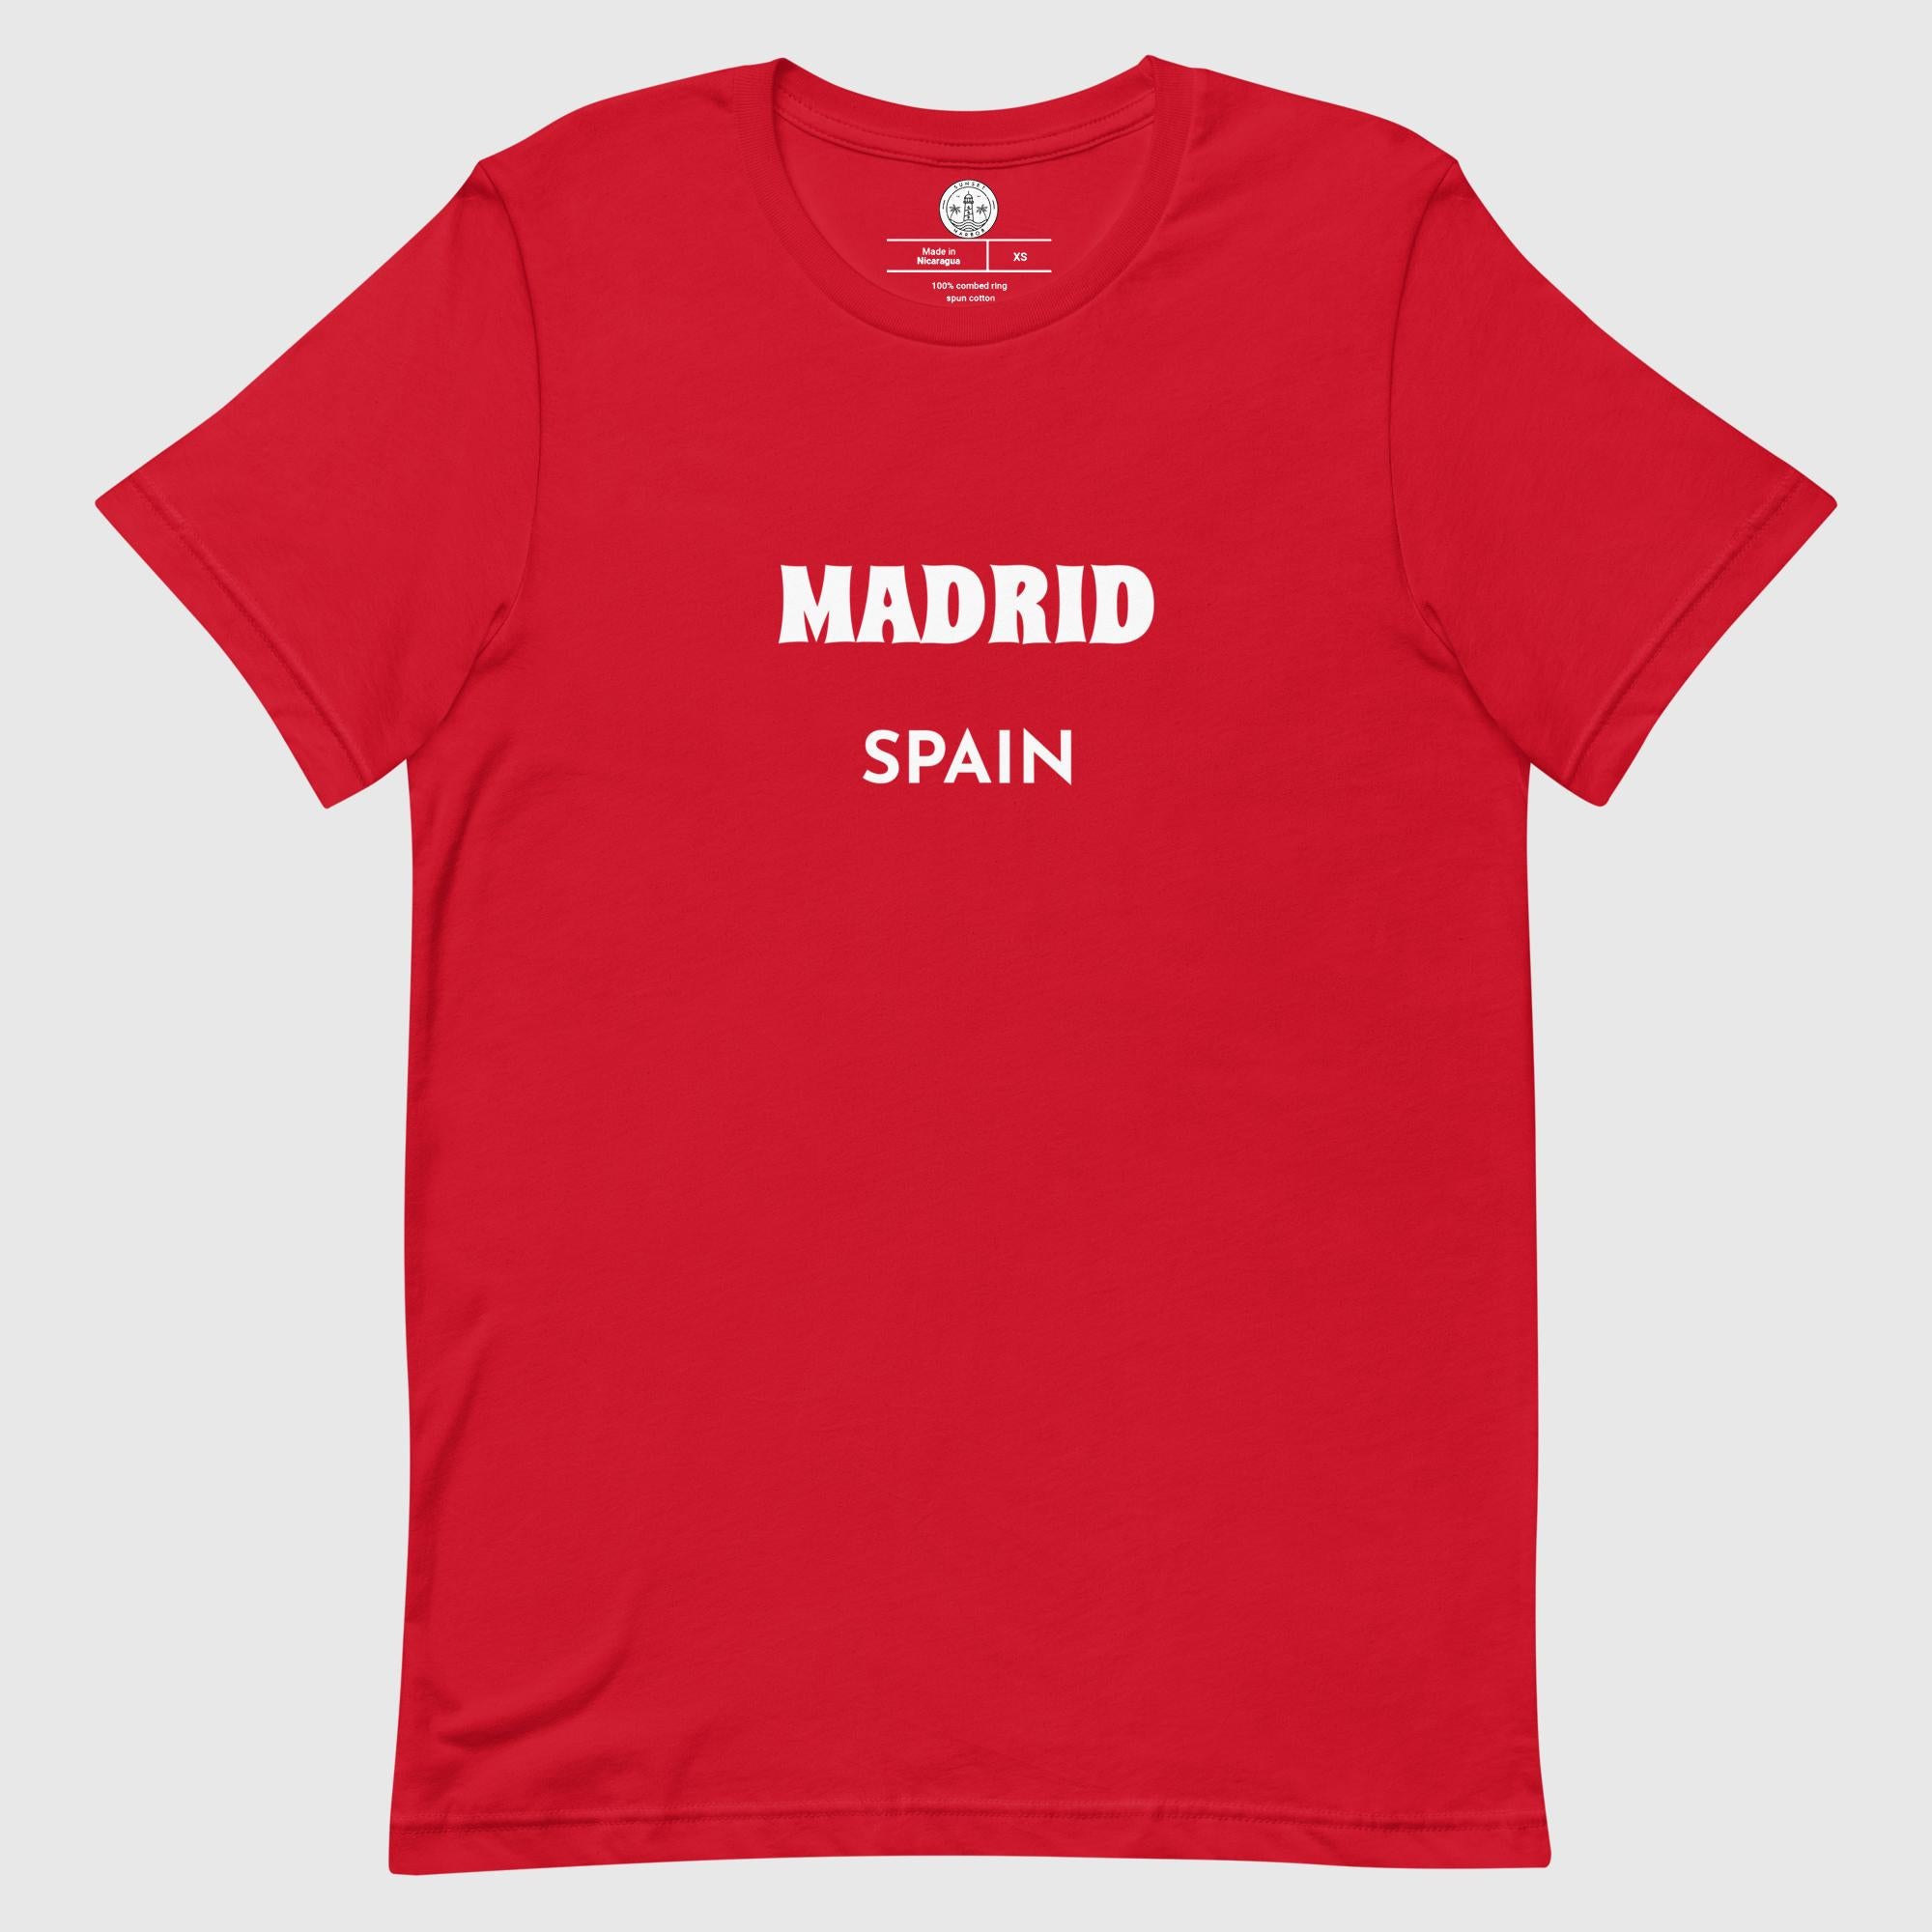 Camiseta unisex - Madrid